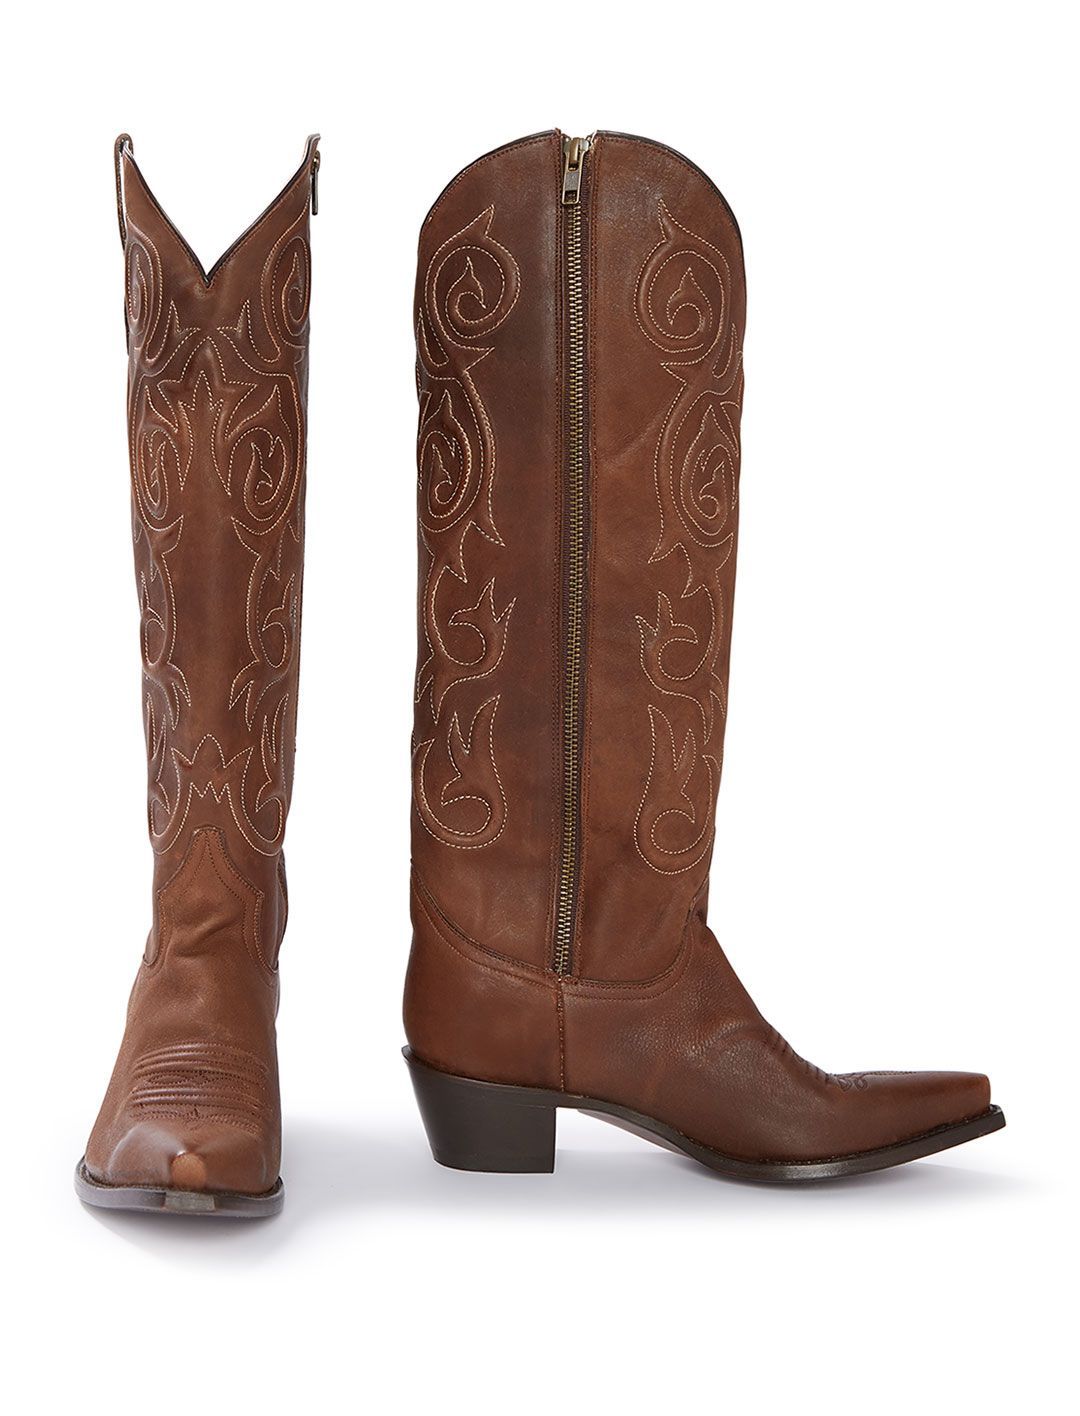 cowboy boots with a zipper